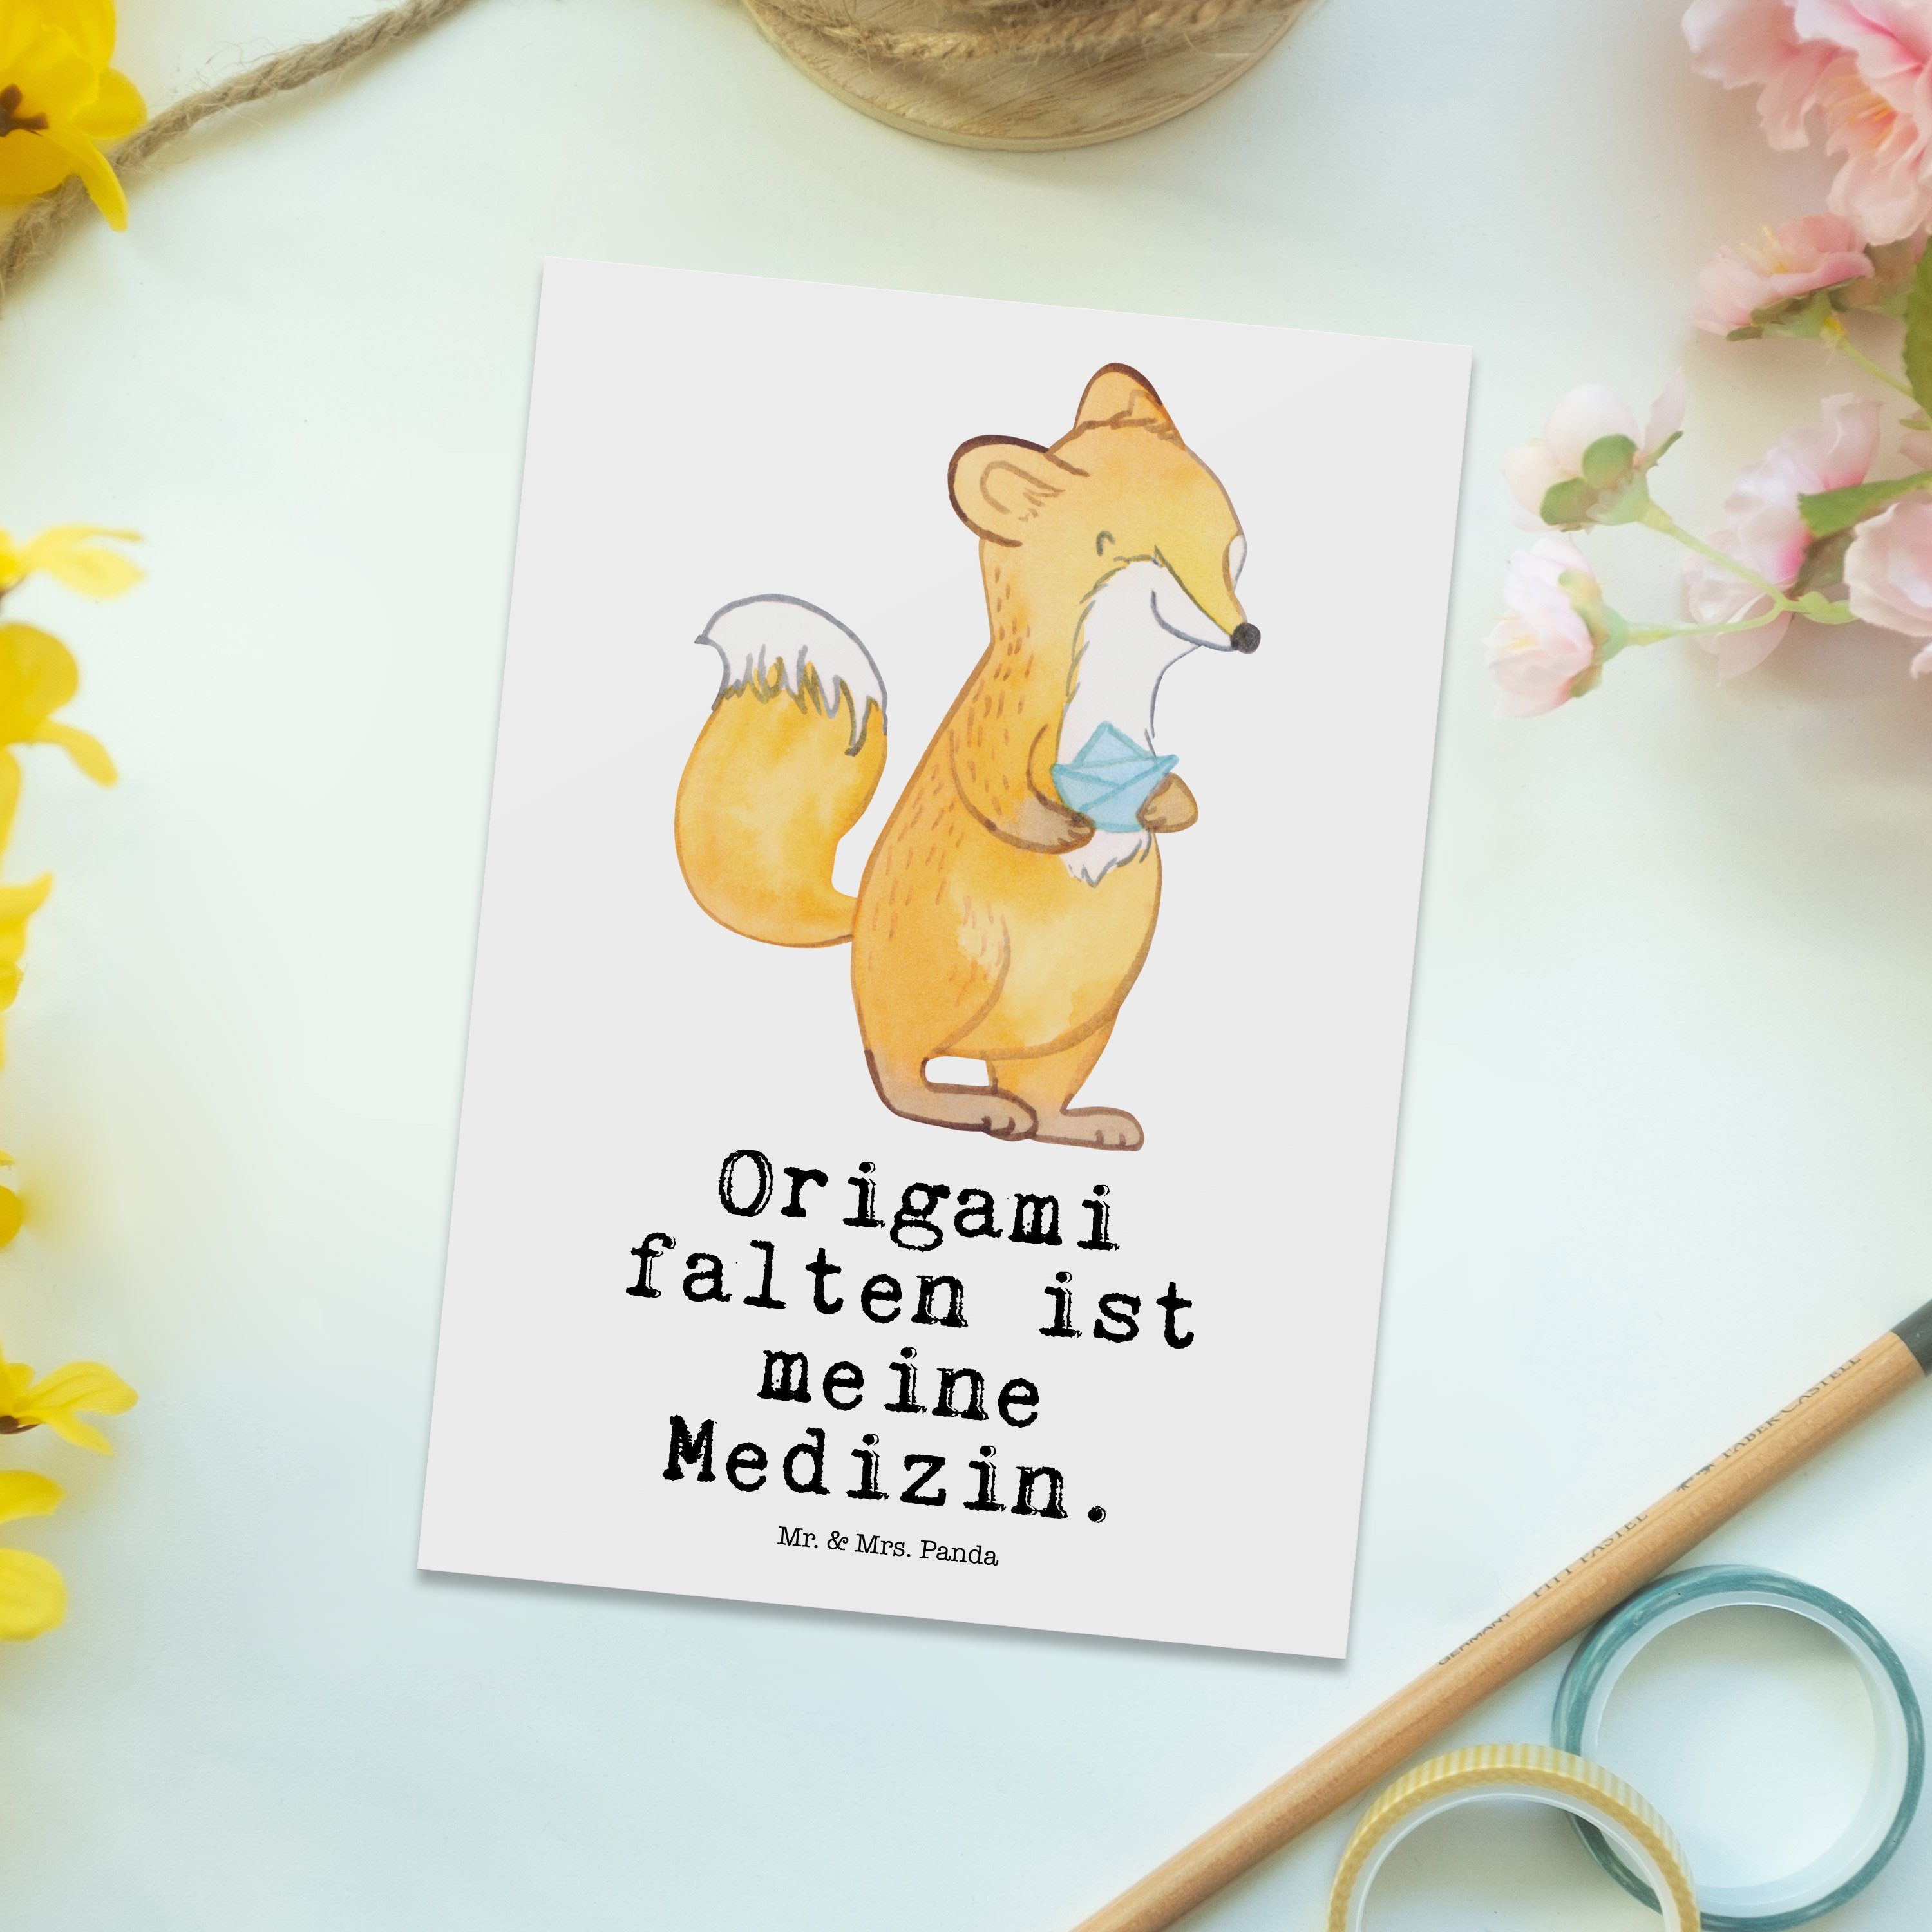 Mr. & Mrs. Panda Postkarte japanische Origami Weiß - Hobby Medizin Faltkunst, Fuchs - Geschenk